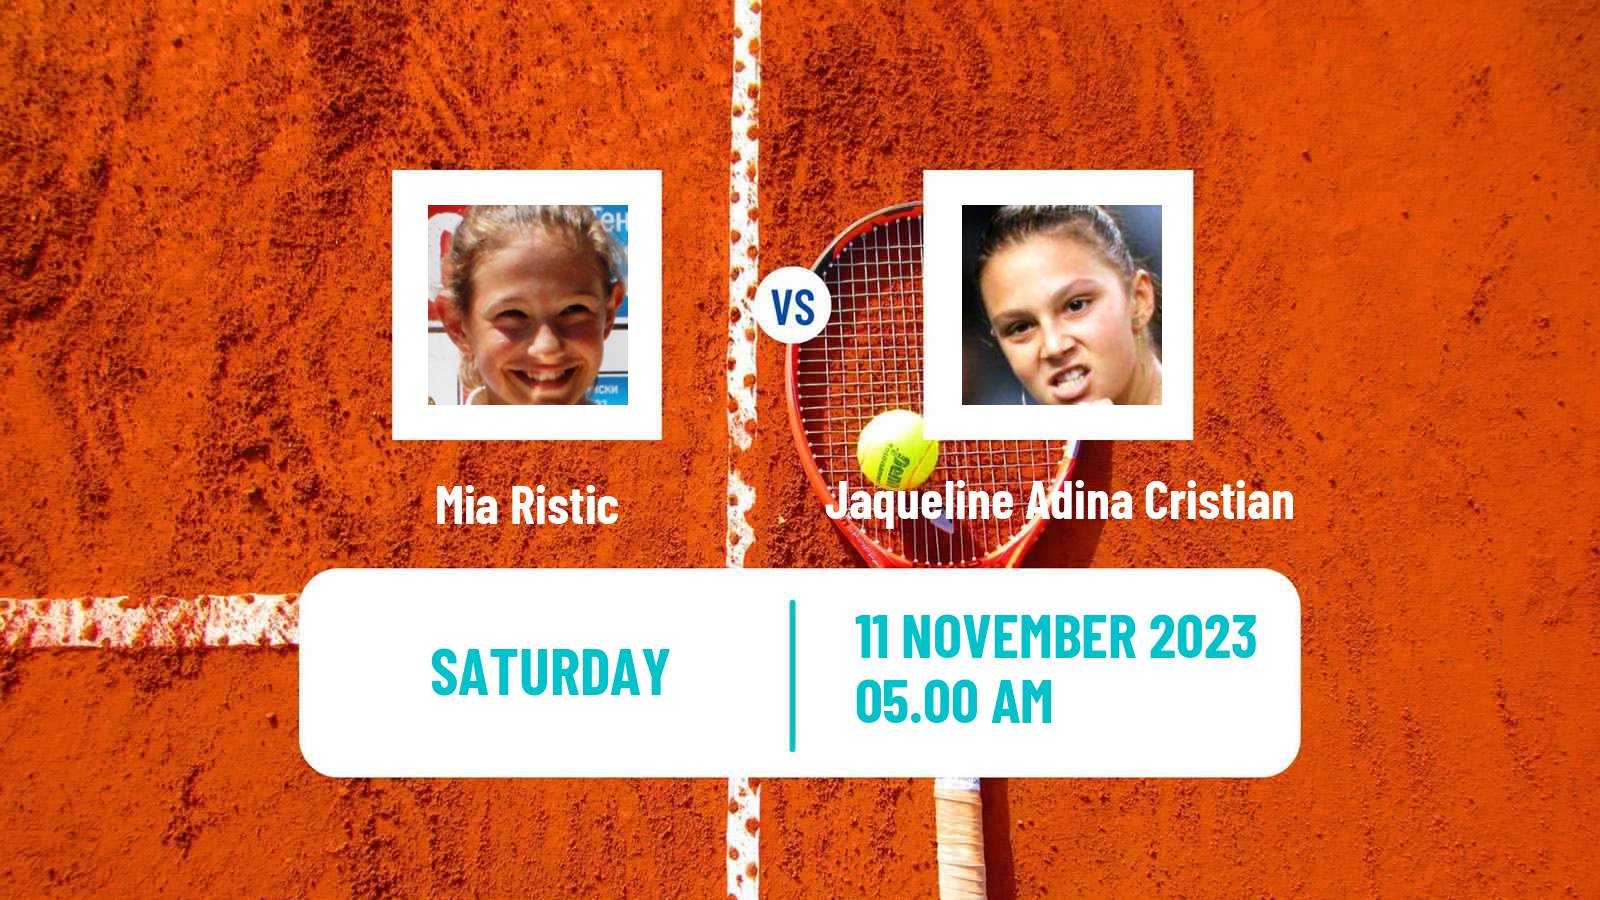 Tennis WTA Billie Jean King Cup World Group Mia Ristic - Jaqueline Adina Cristian